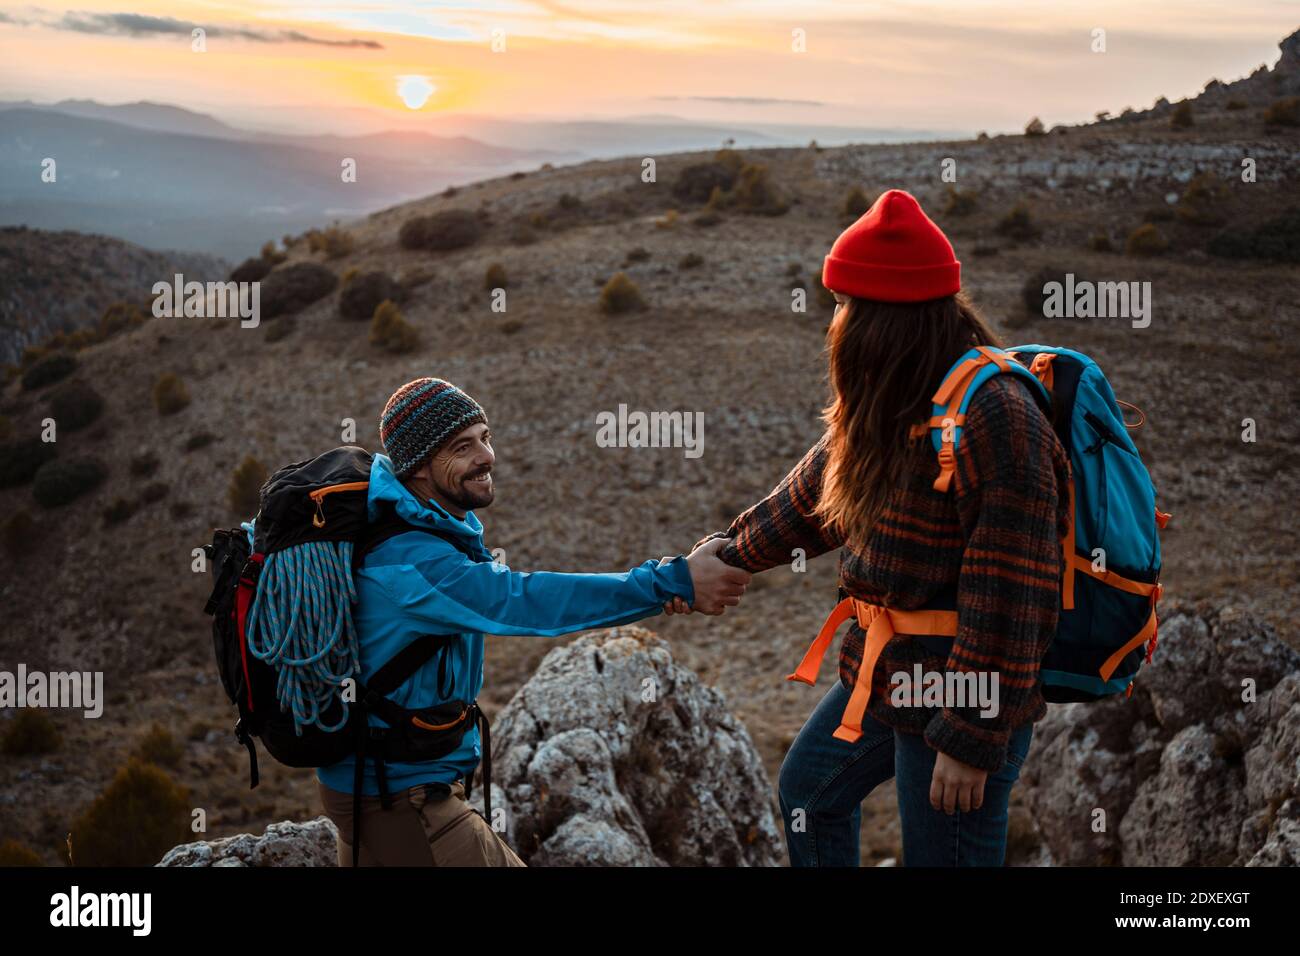 Freundin hilft Freund zu klettern felsigen Berg während Sonnenuntergang Stockfoto